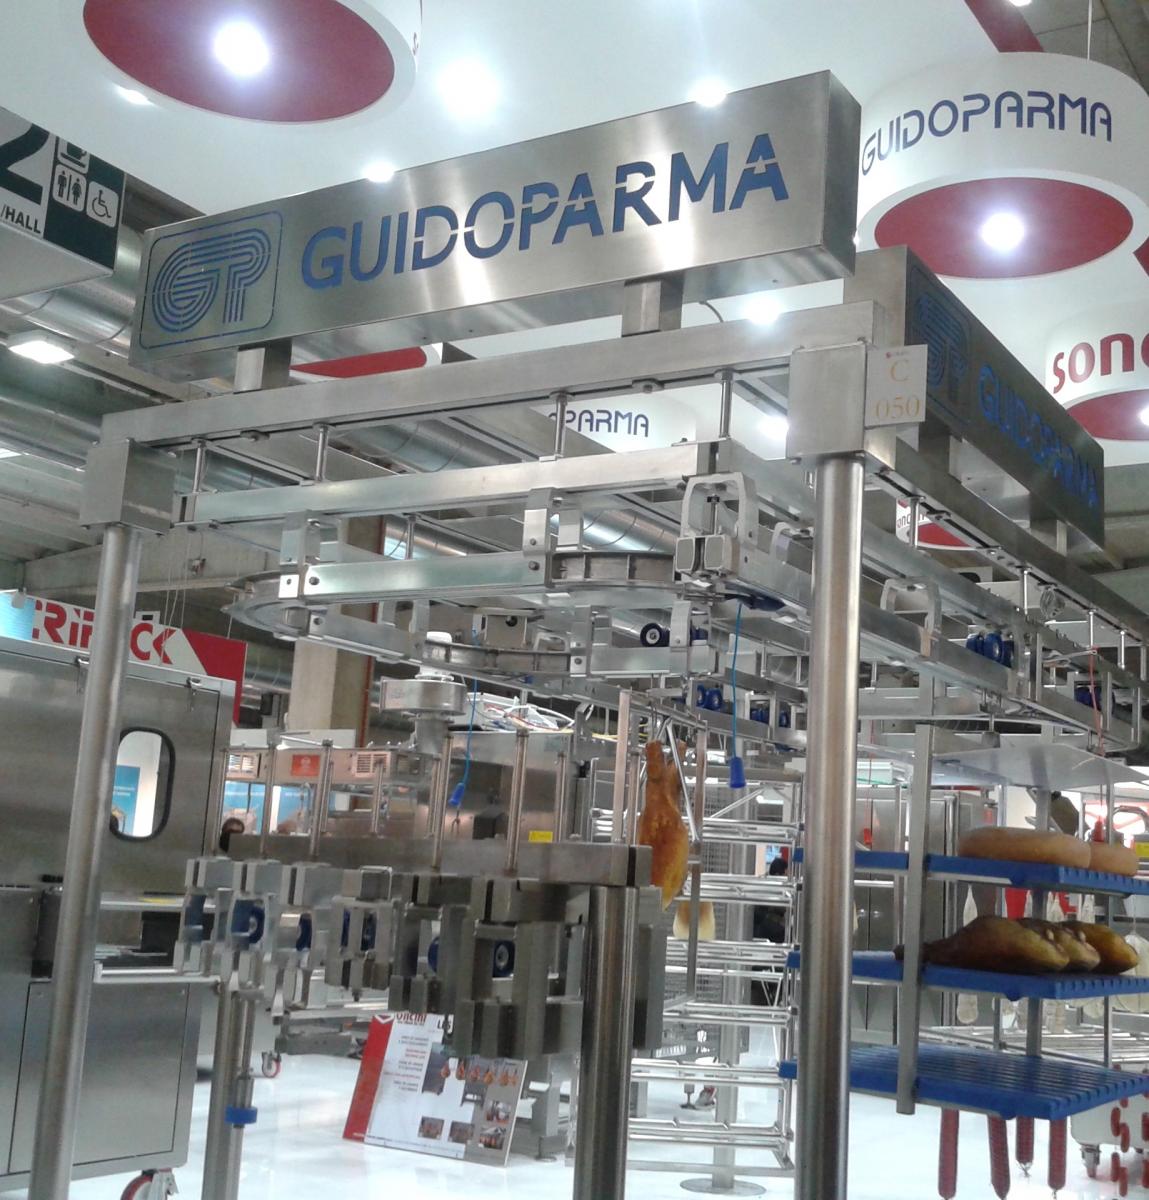 Guidoparma's food handling storage